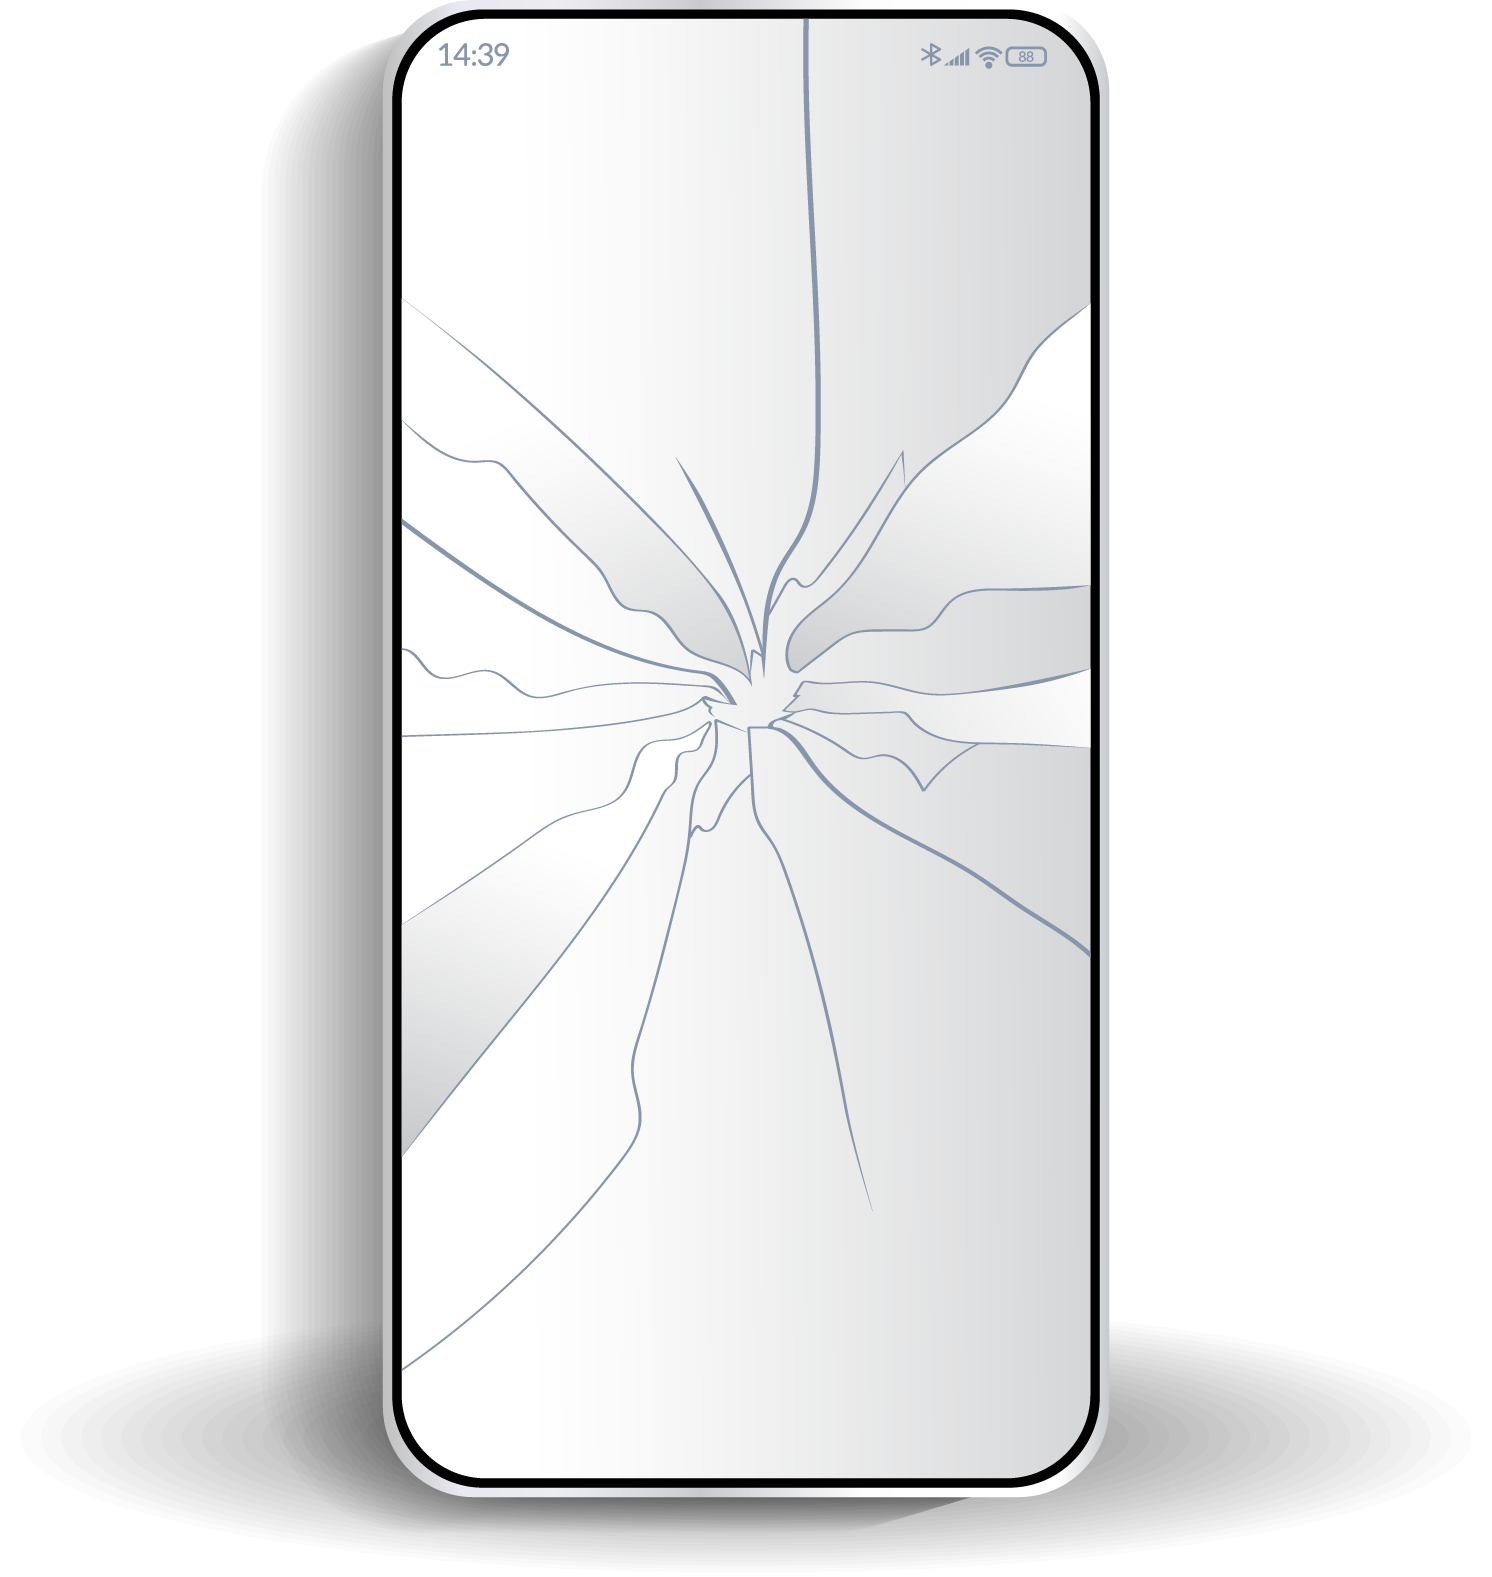 Samsung Galaxy Z Flip (SM-F700F) Screen Replacement